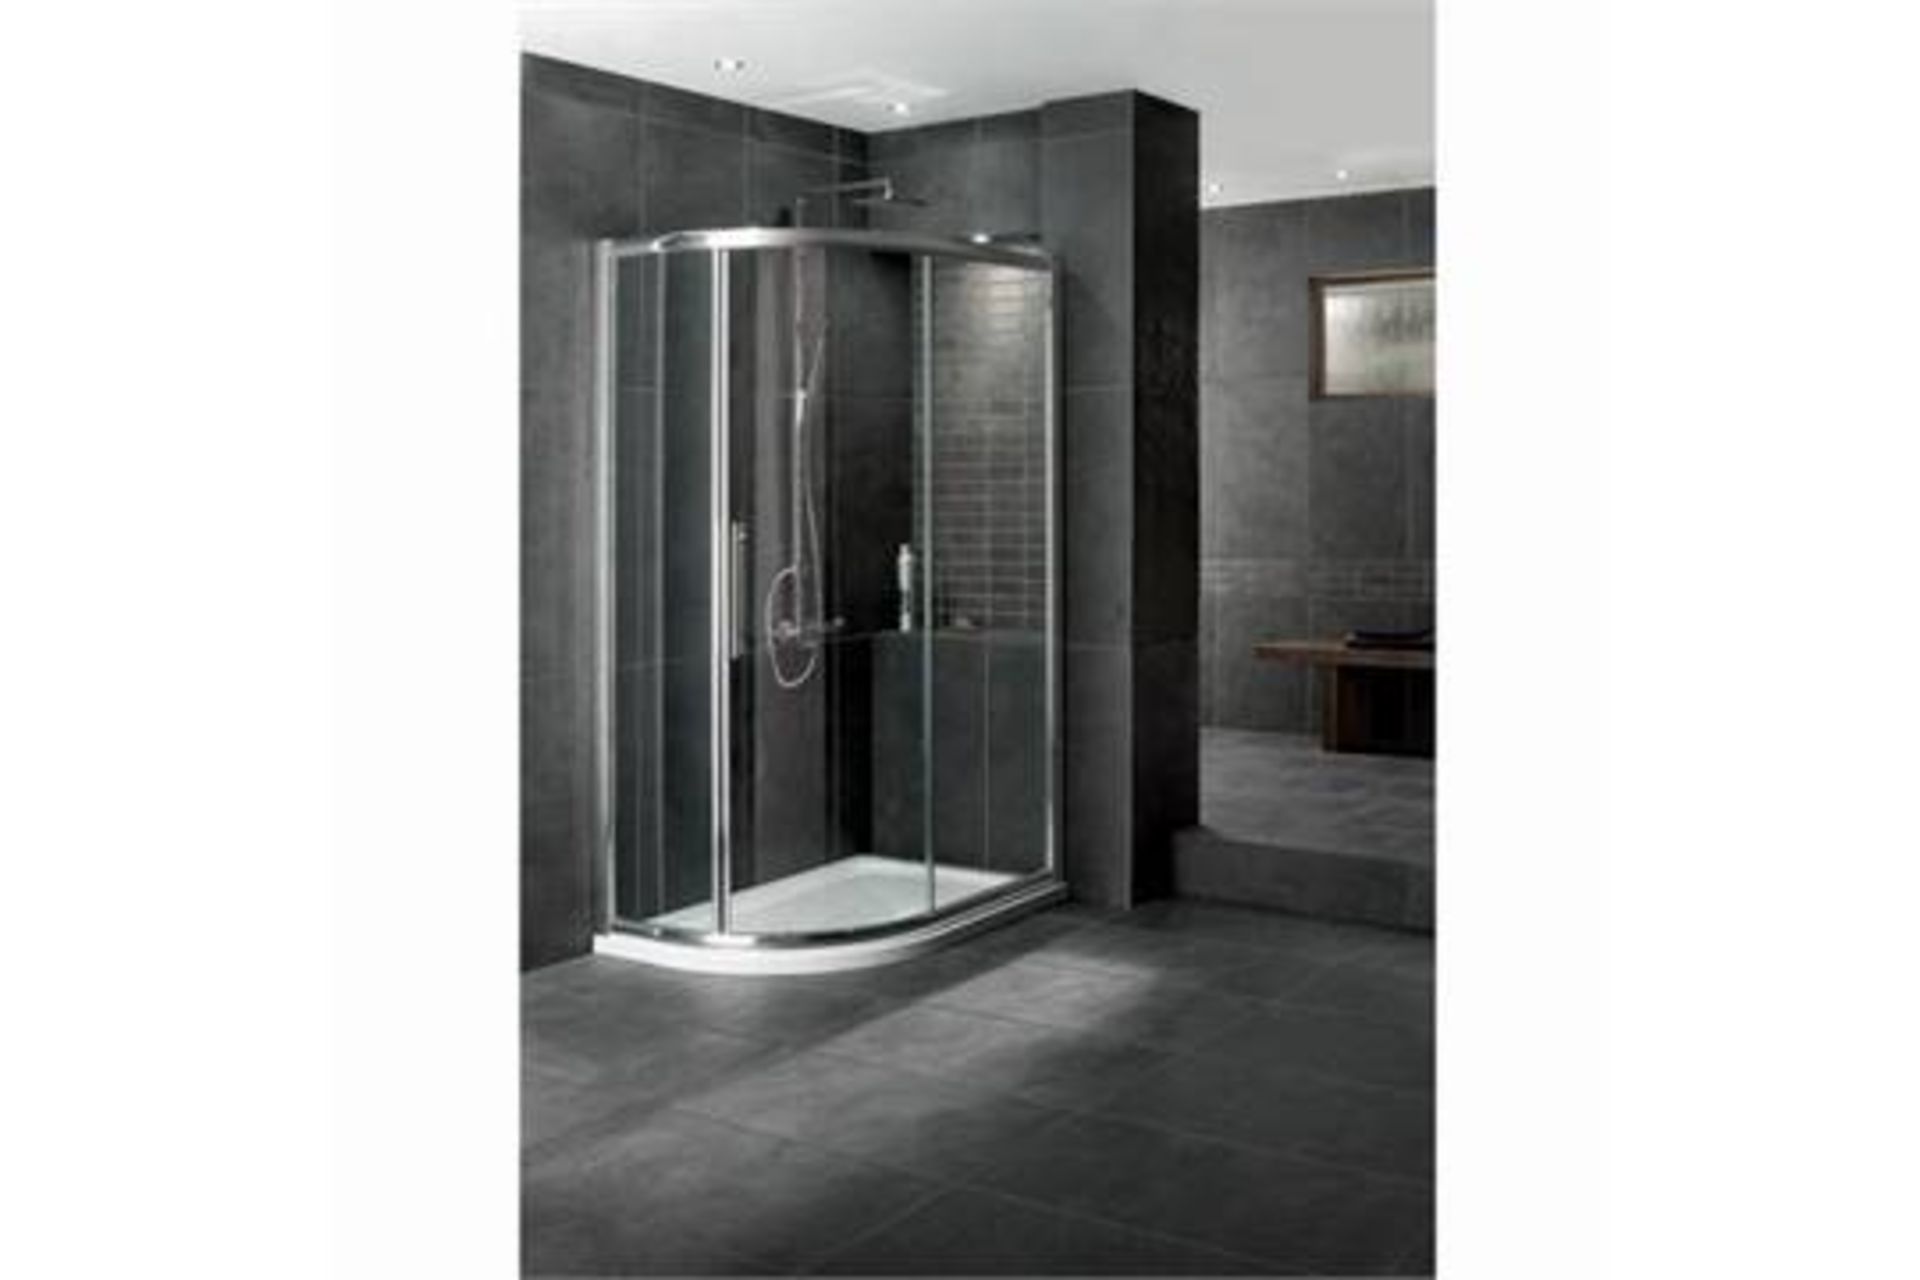 1 x Vogue SULIS Offset Quadrant 1100x900mm Shower Enclosure - Polished Chrome Finish - 6mm Clear